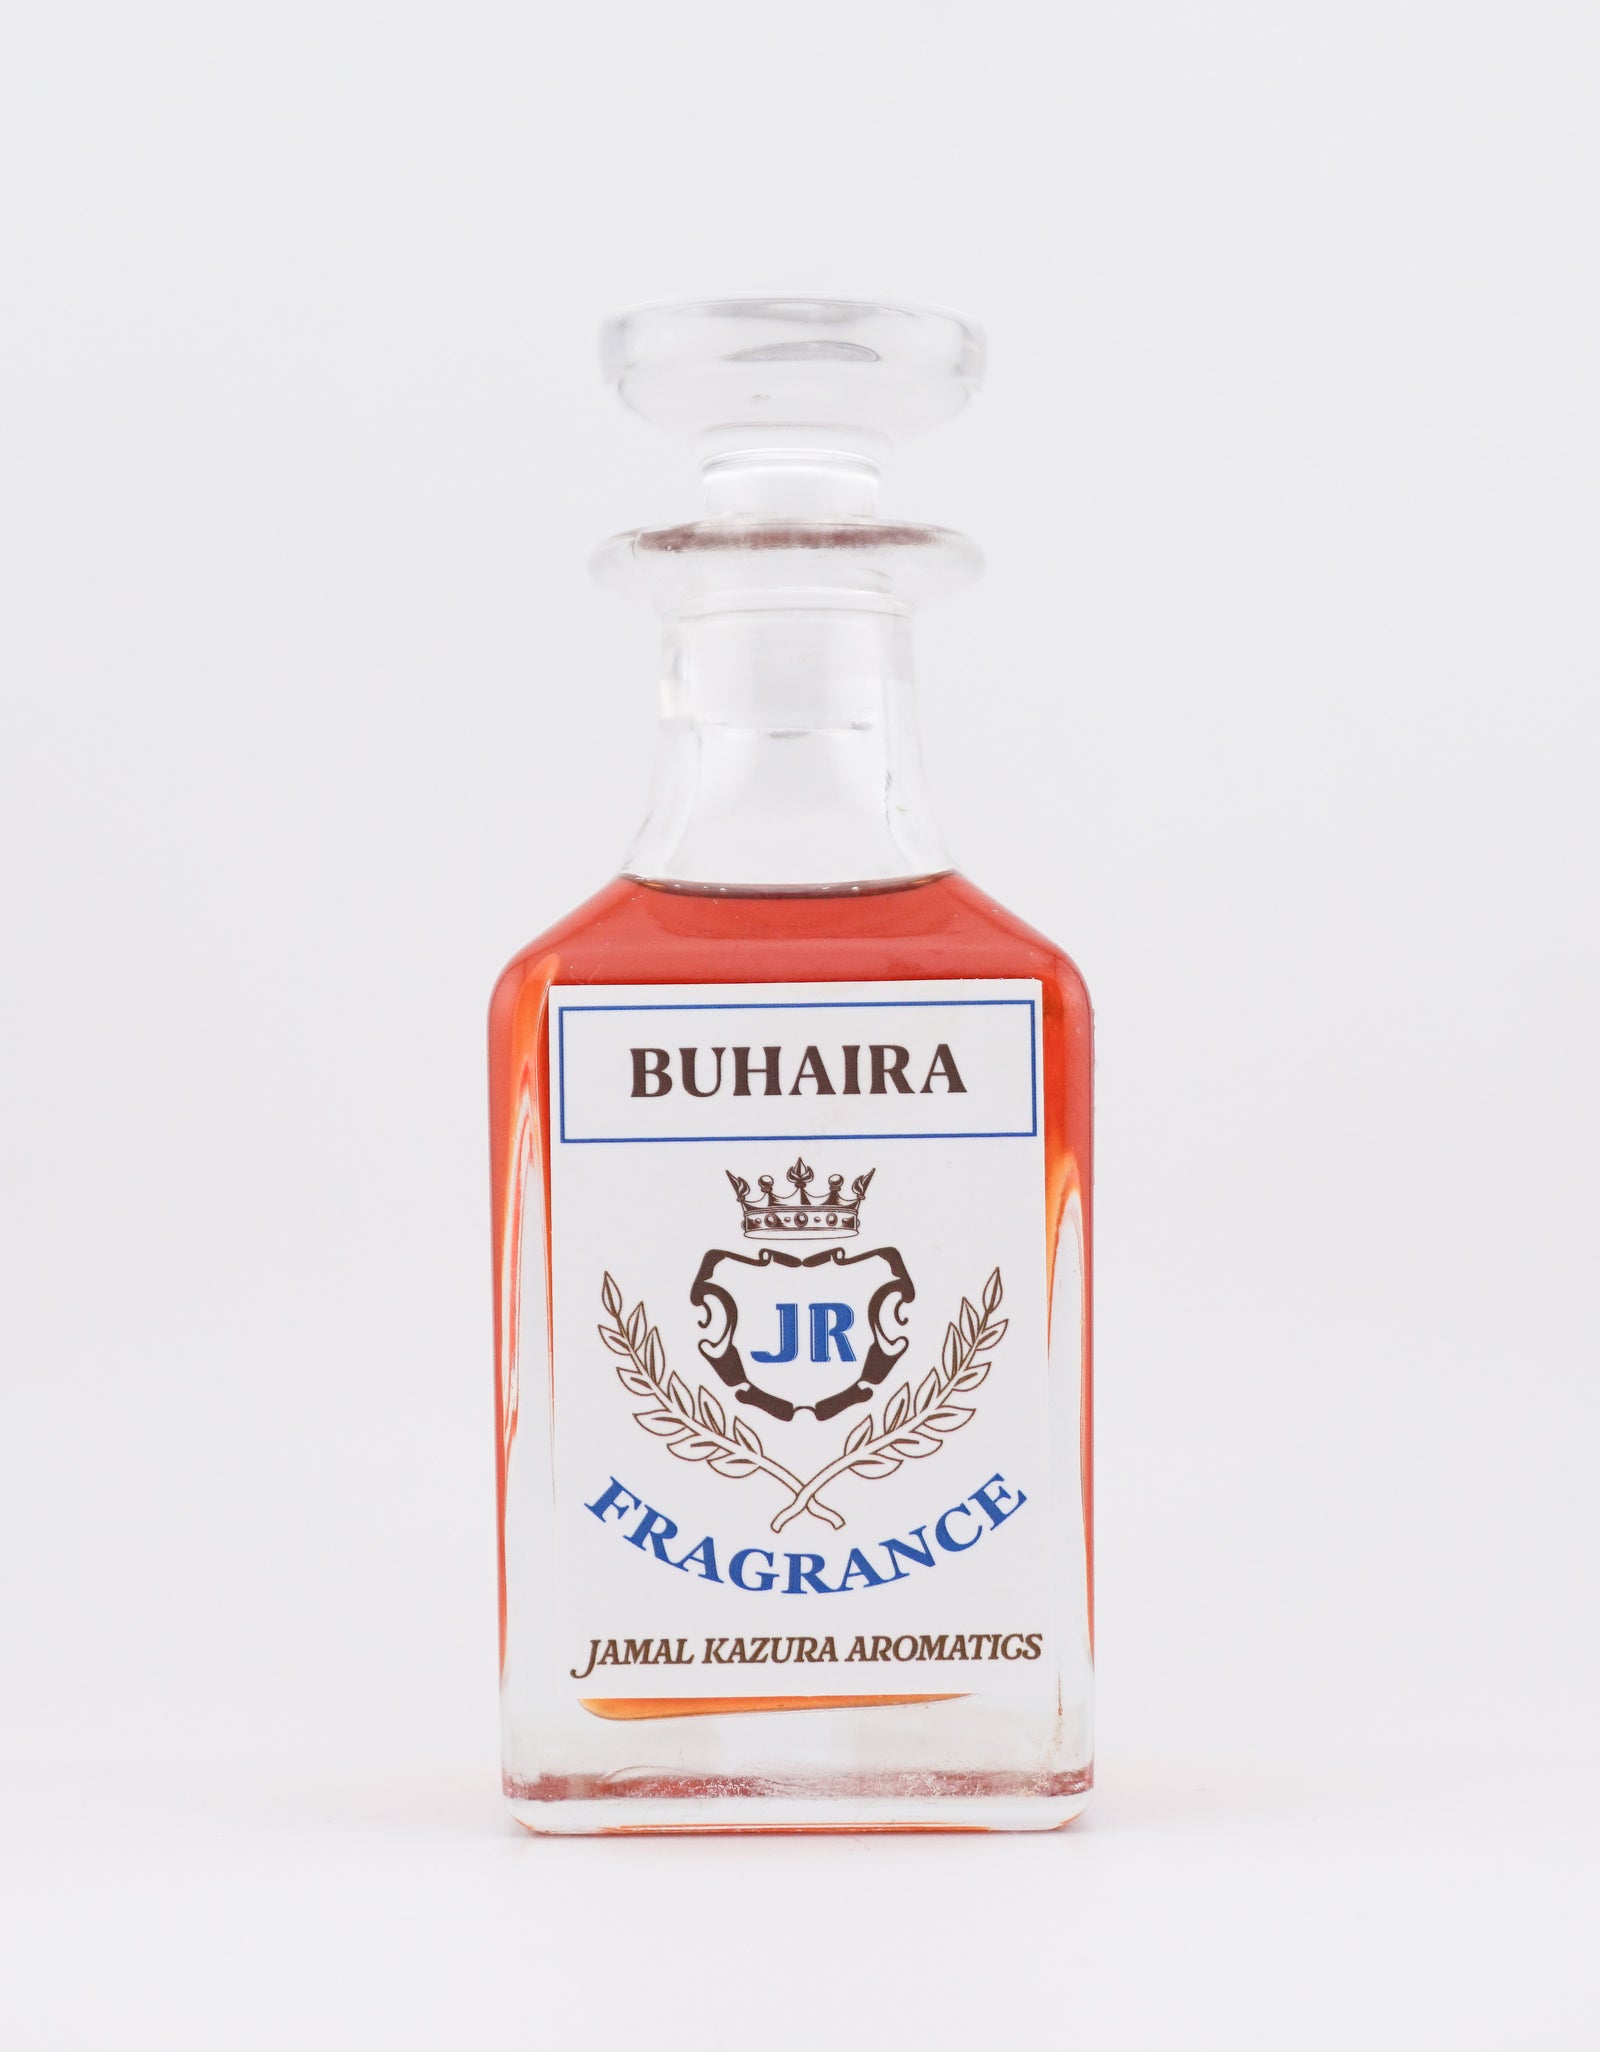 Buhaira Perfume Decanters - Jamal Kazura Aromatics